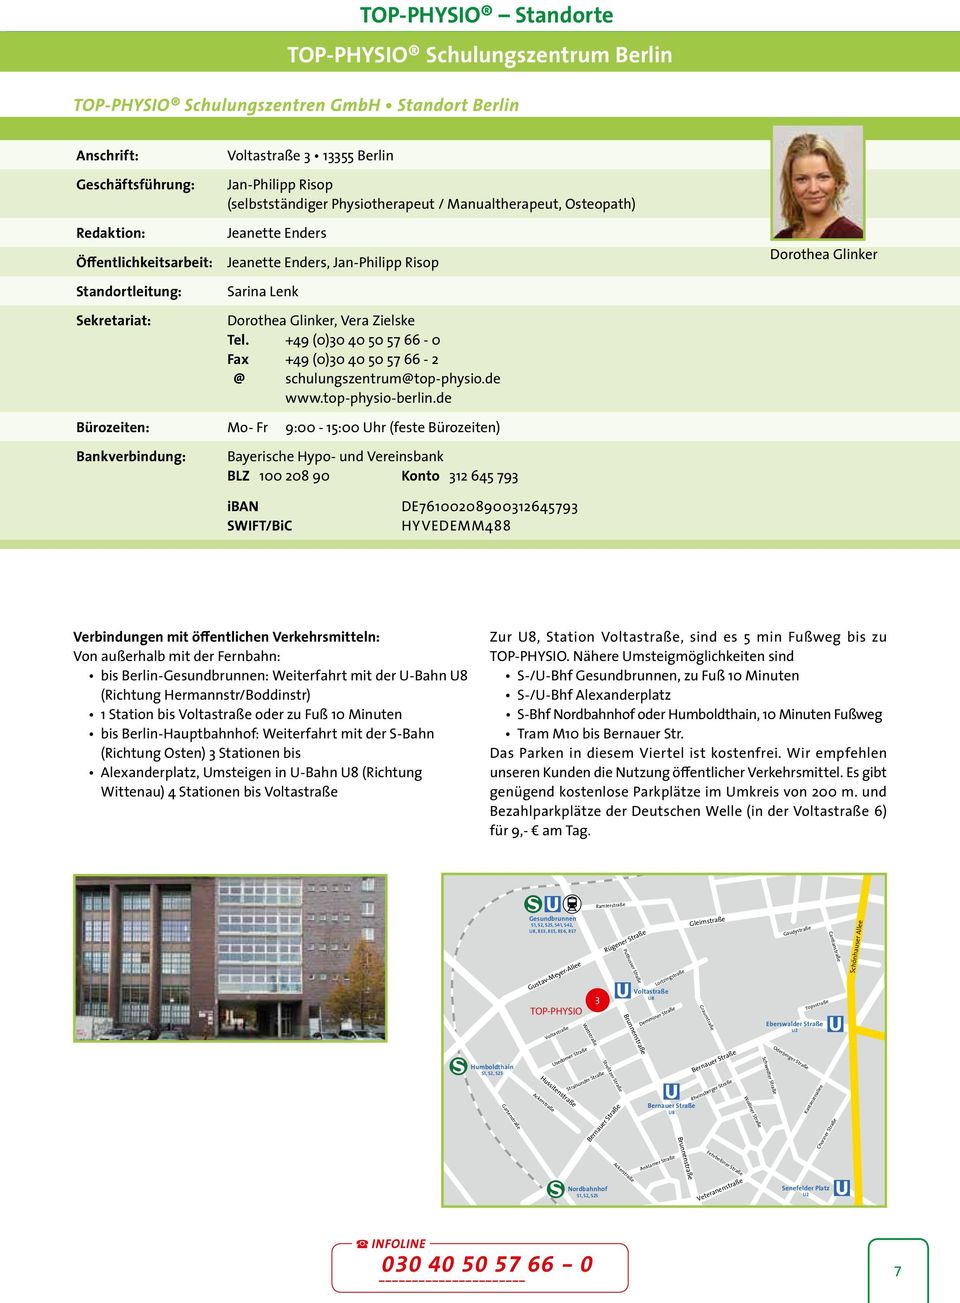 +49 (0)30 40 50 57 66-0 Fax +49 (0)30 40 50 57 66-2 @ schulungszentrum@top-physio.de www.top-physio-berlin.